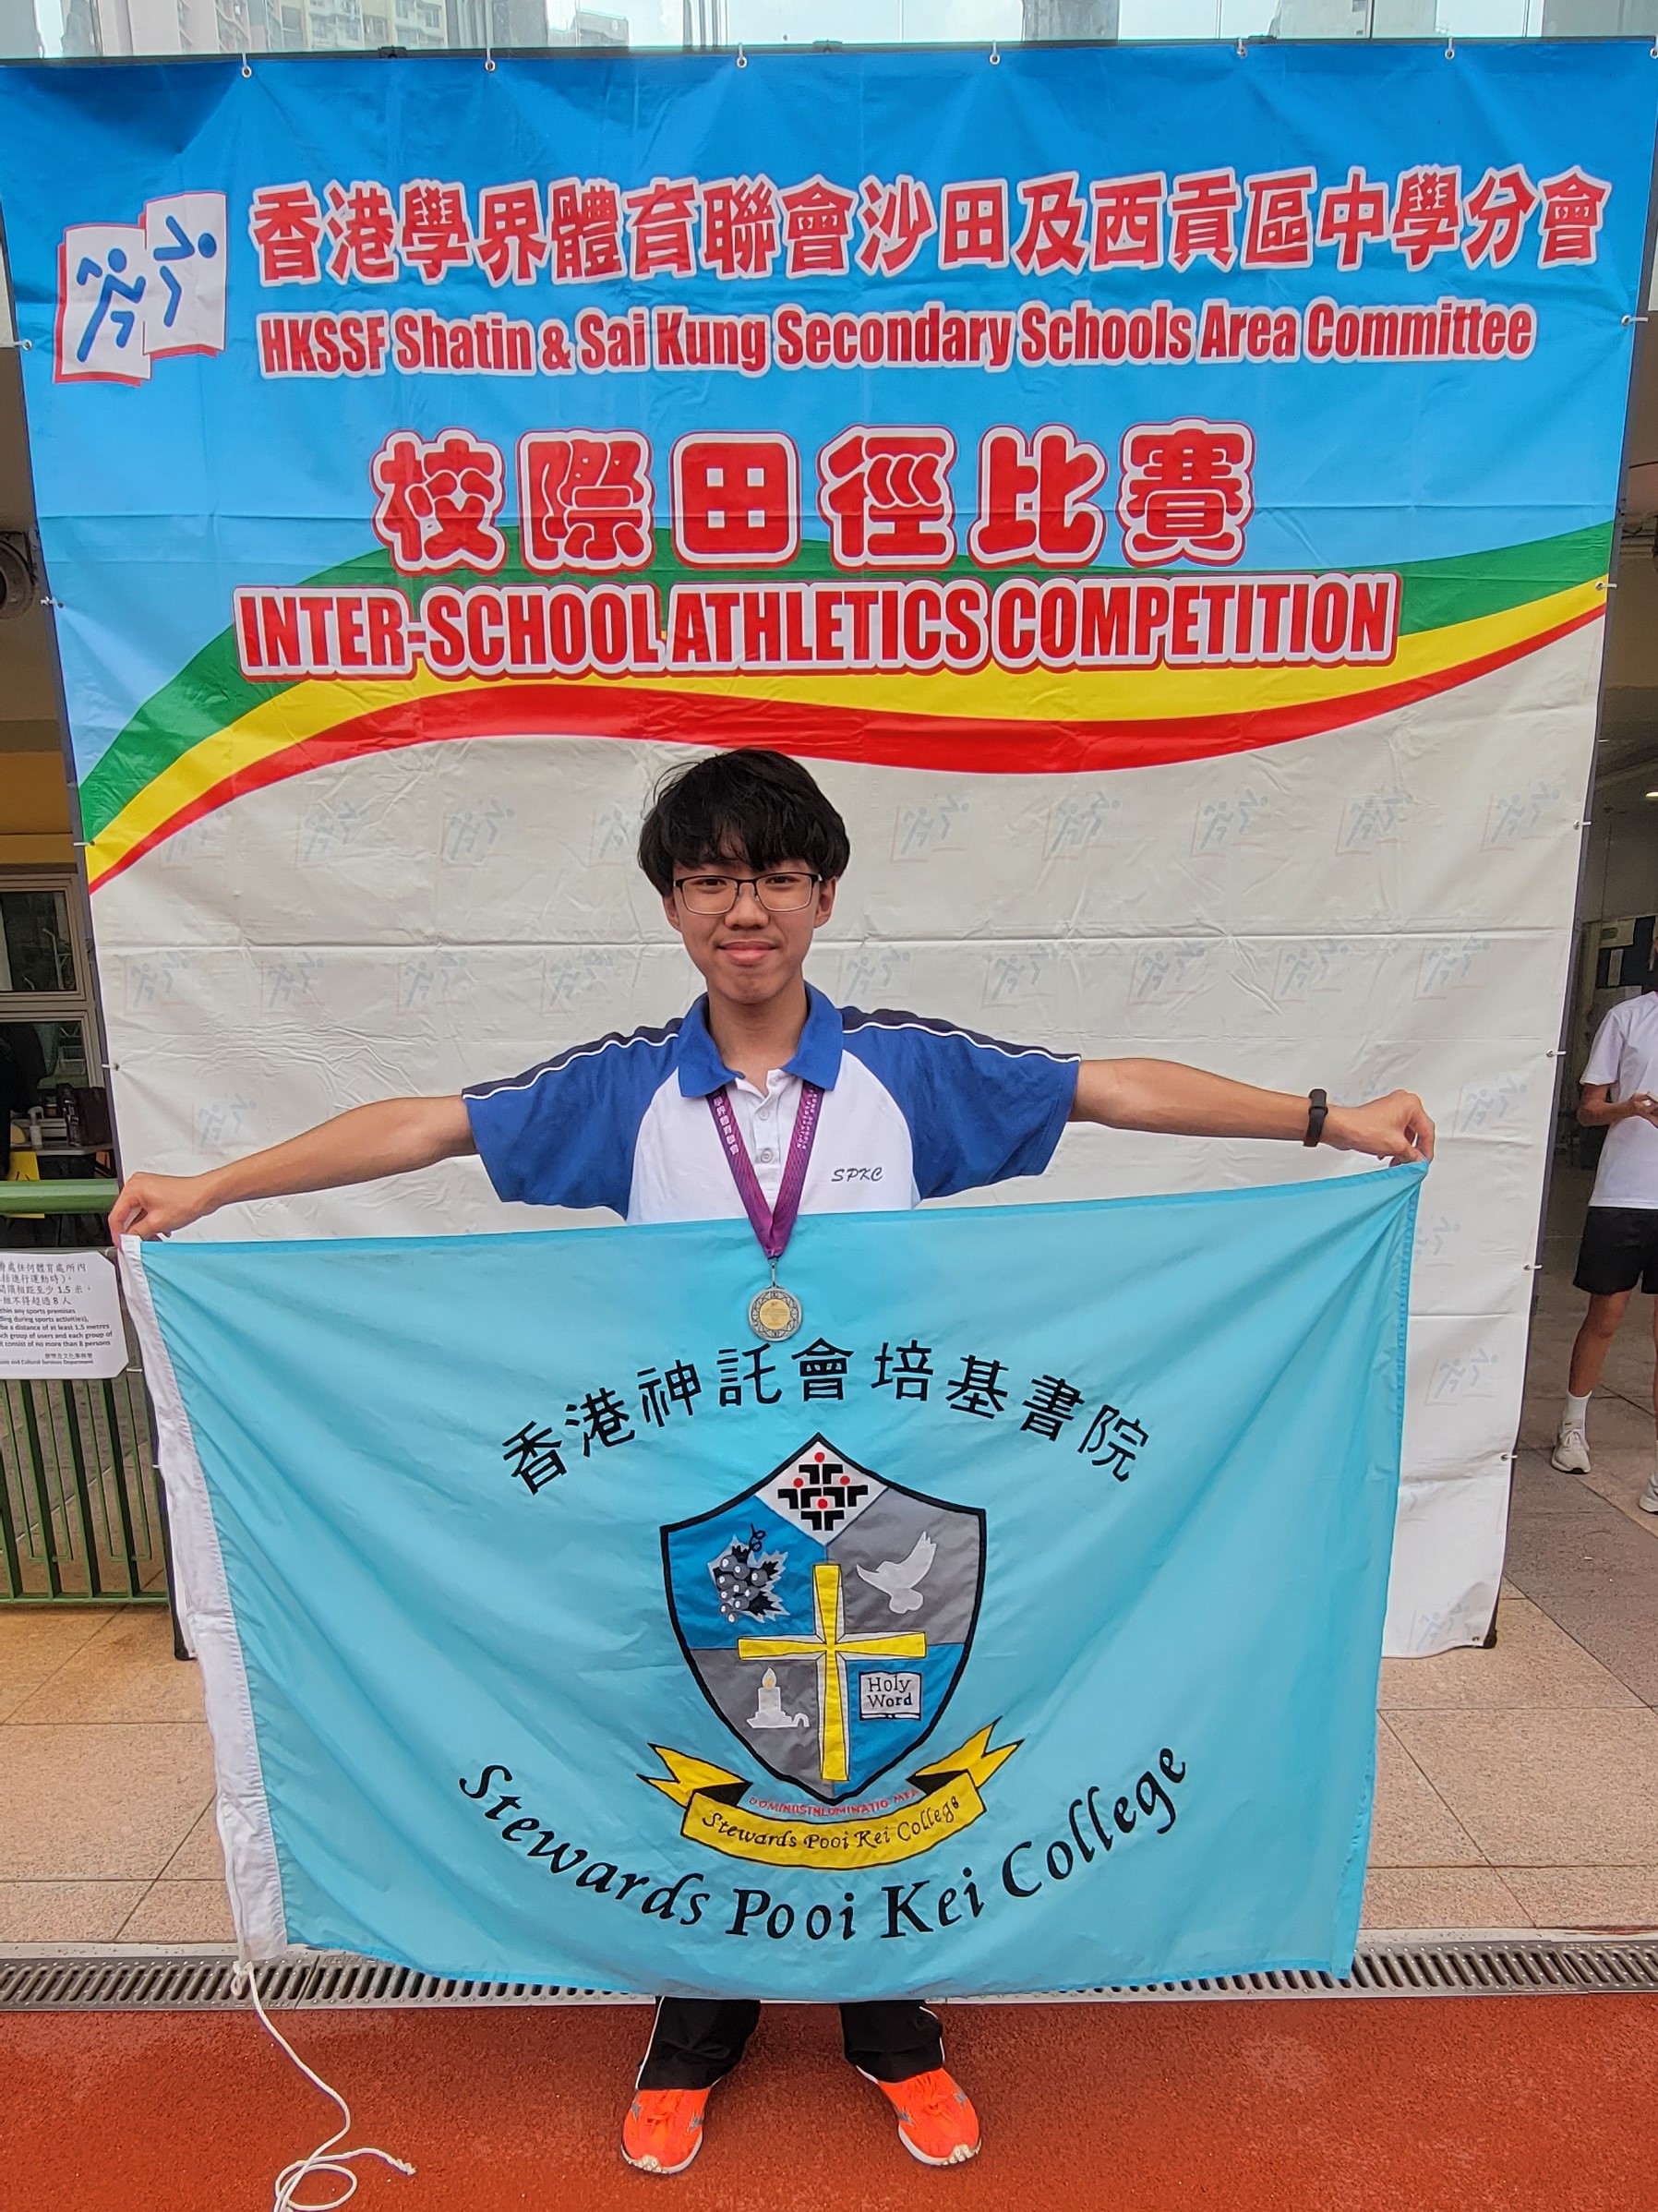 Participation of Inter-school Athletics Championships